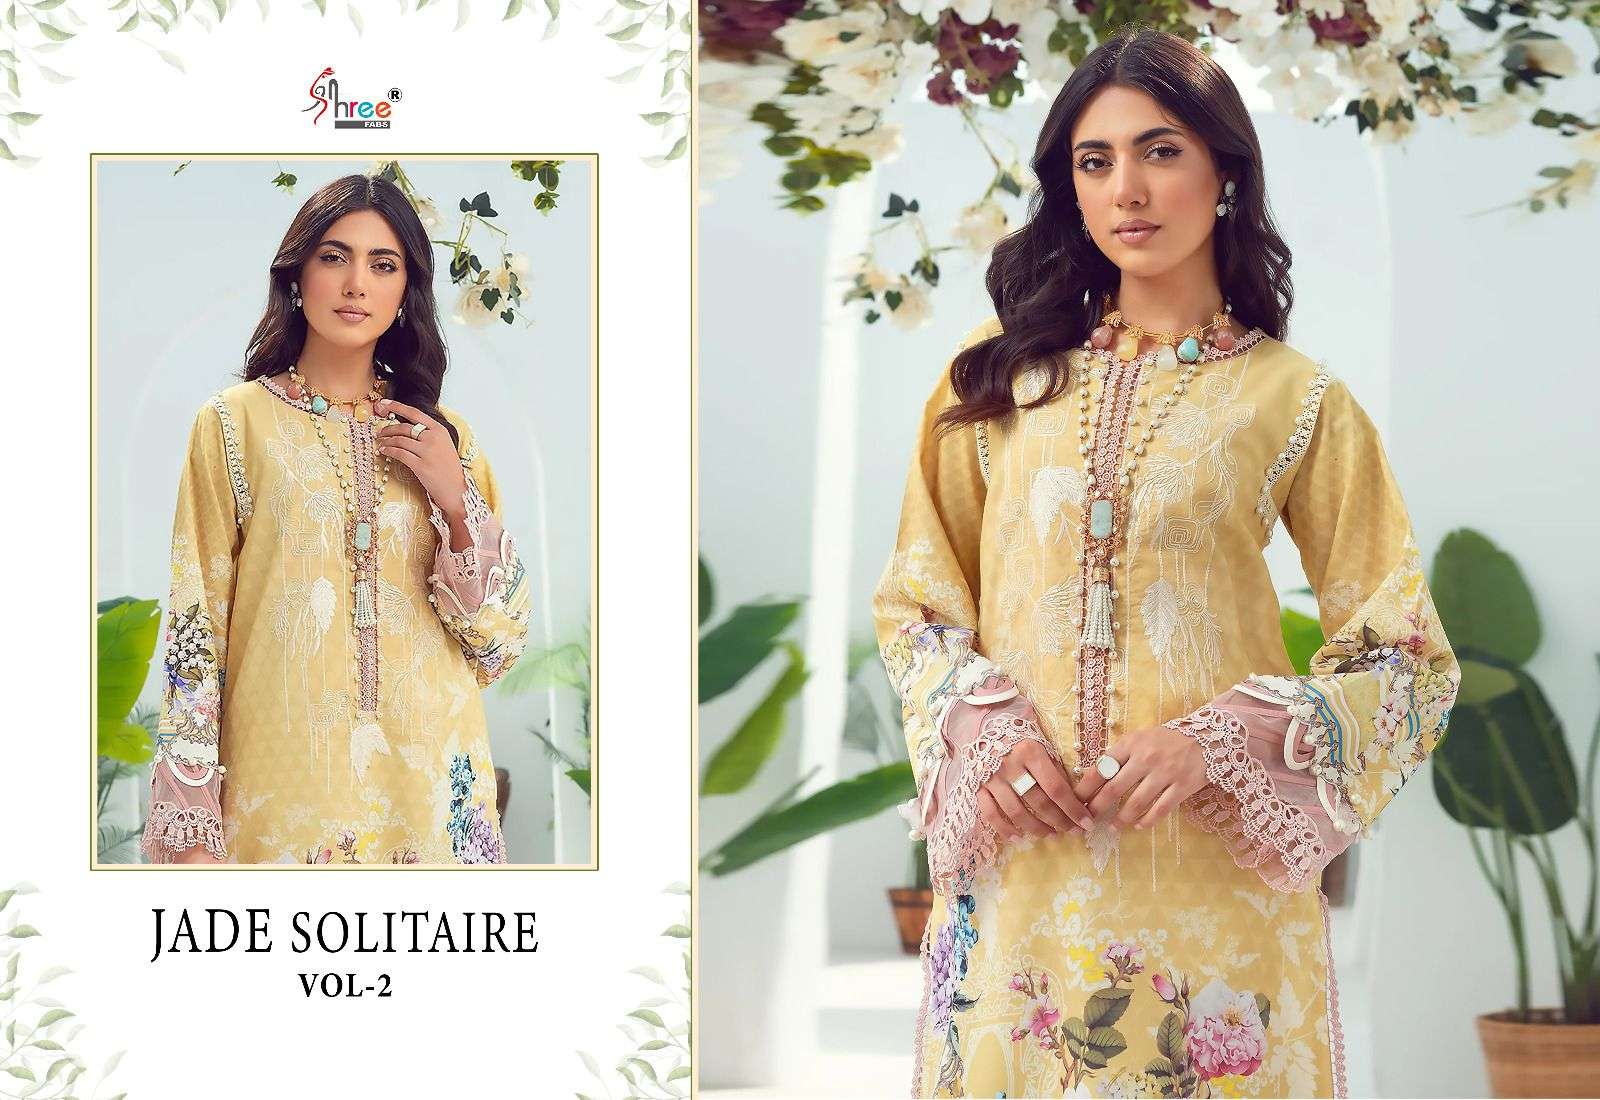 shree fabs jade solitaire vol-2 3087-3090 series latest pakistani salwar kameez wholesale price 